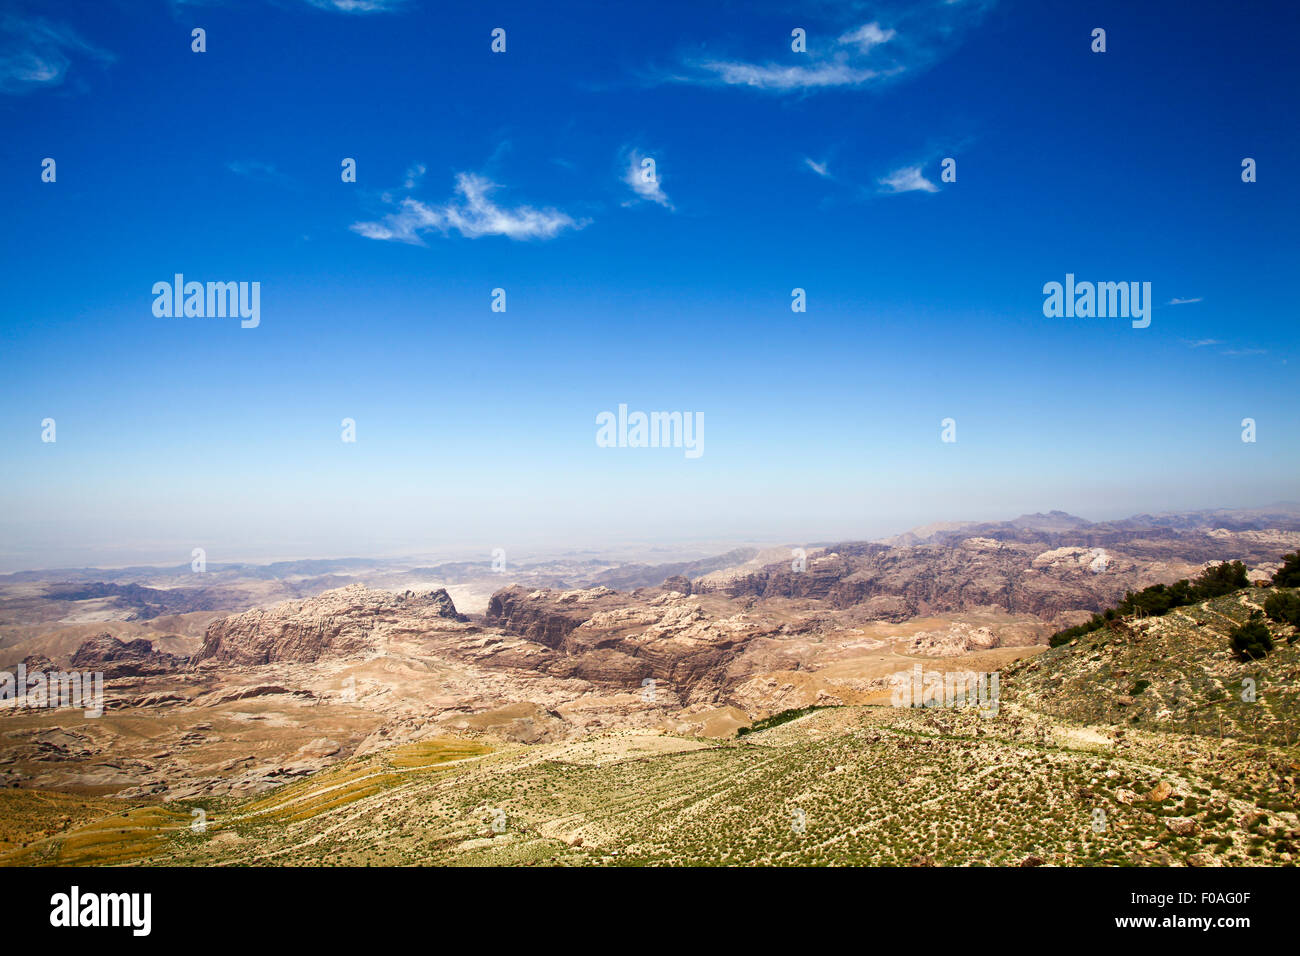 Overlooking Wadi Zered Western Jordanian Landscape Stock Photo